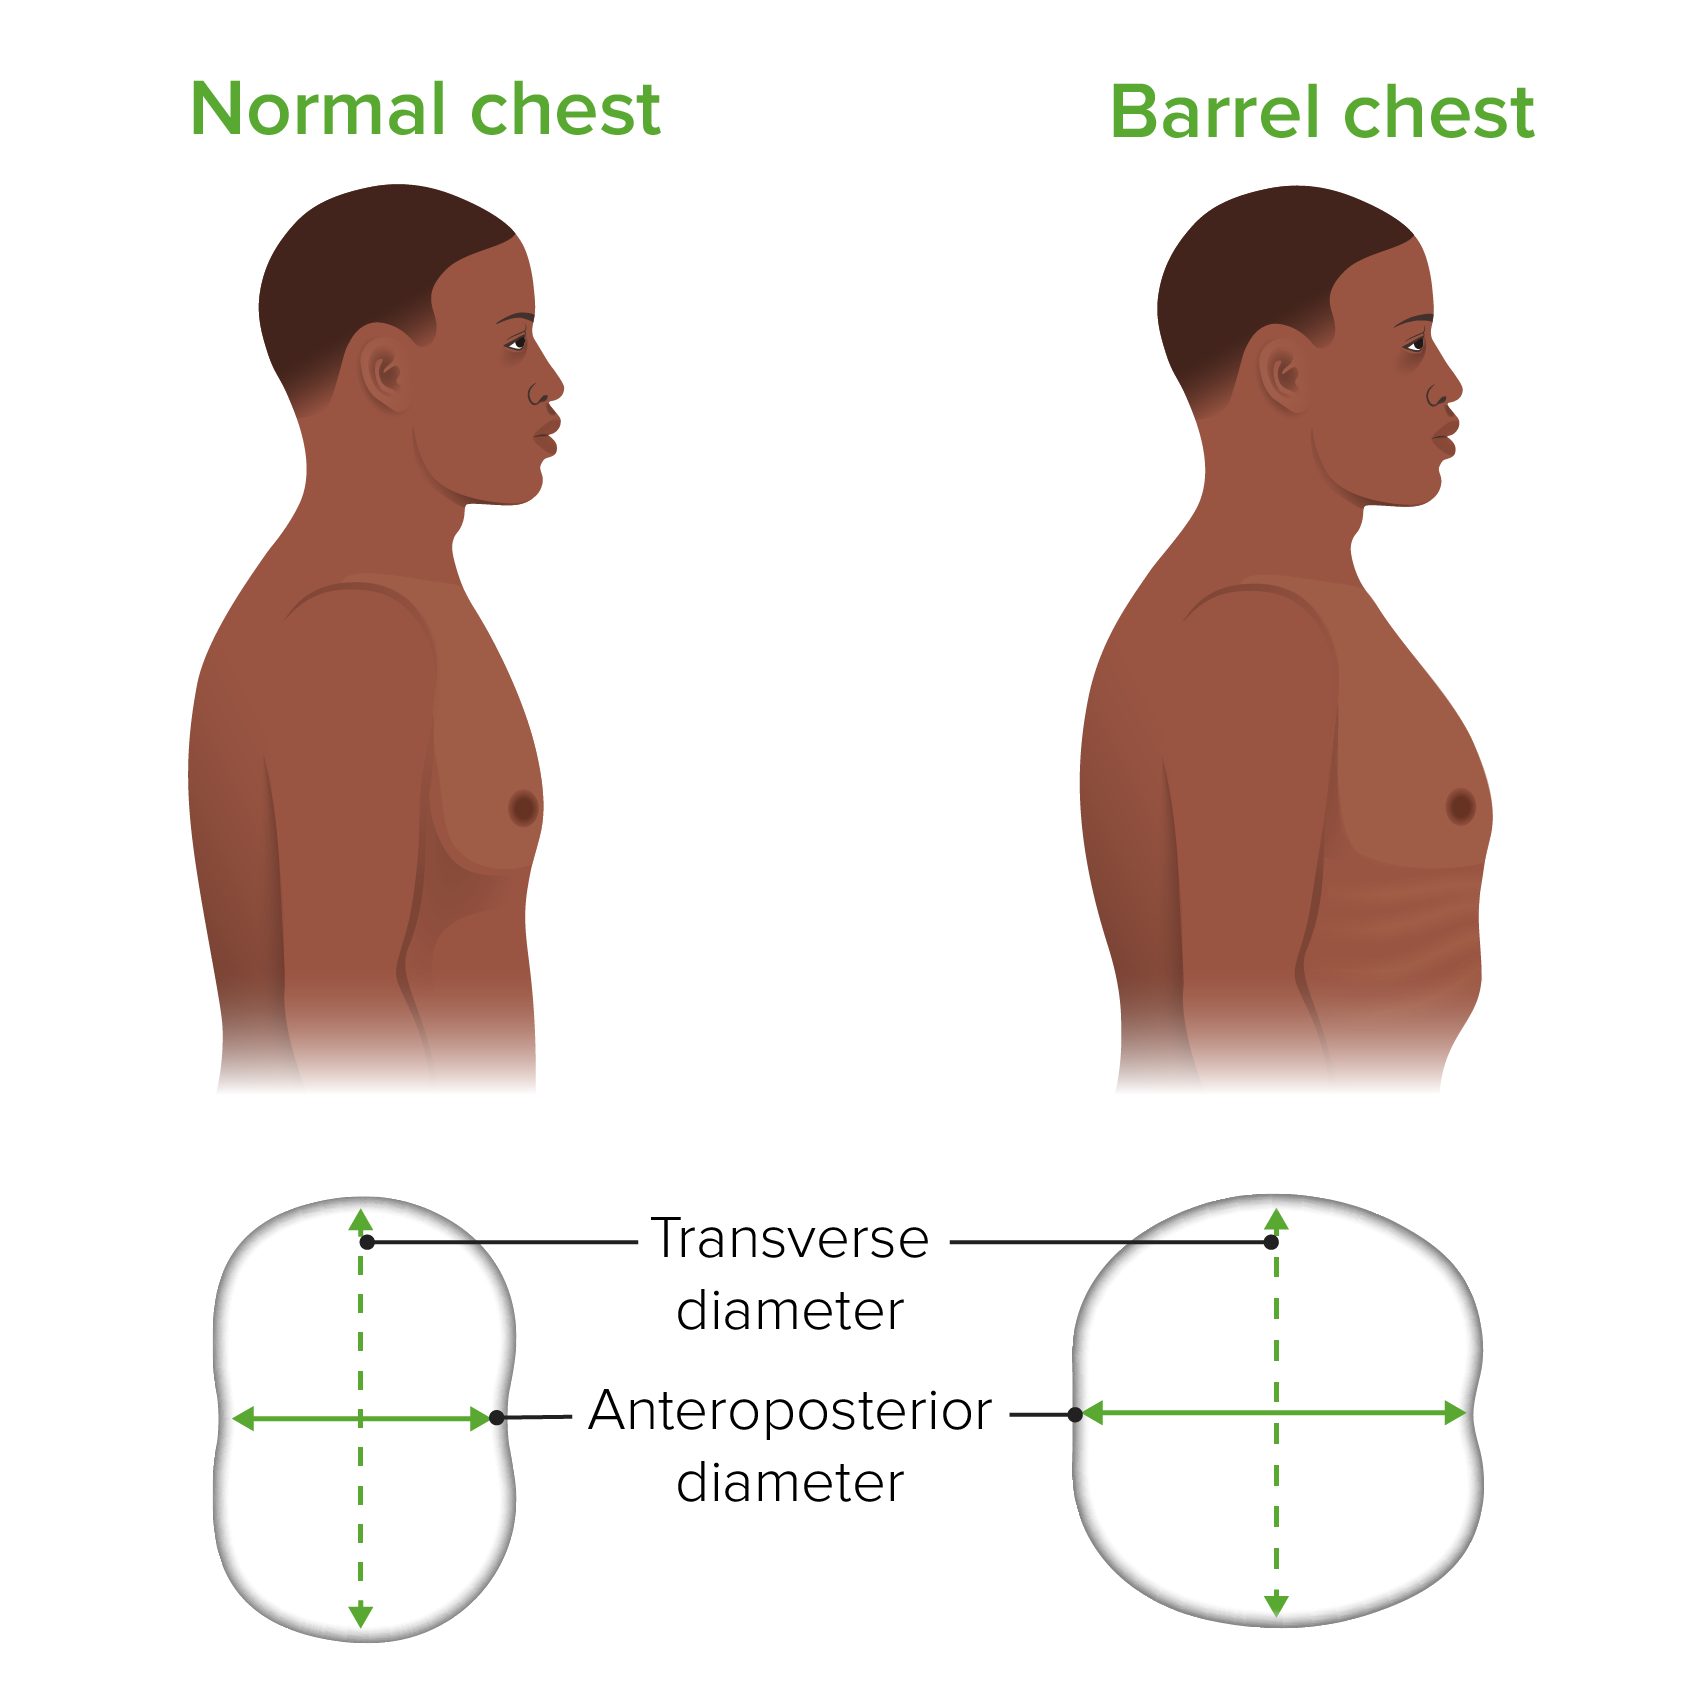 Barrel shaped chest